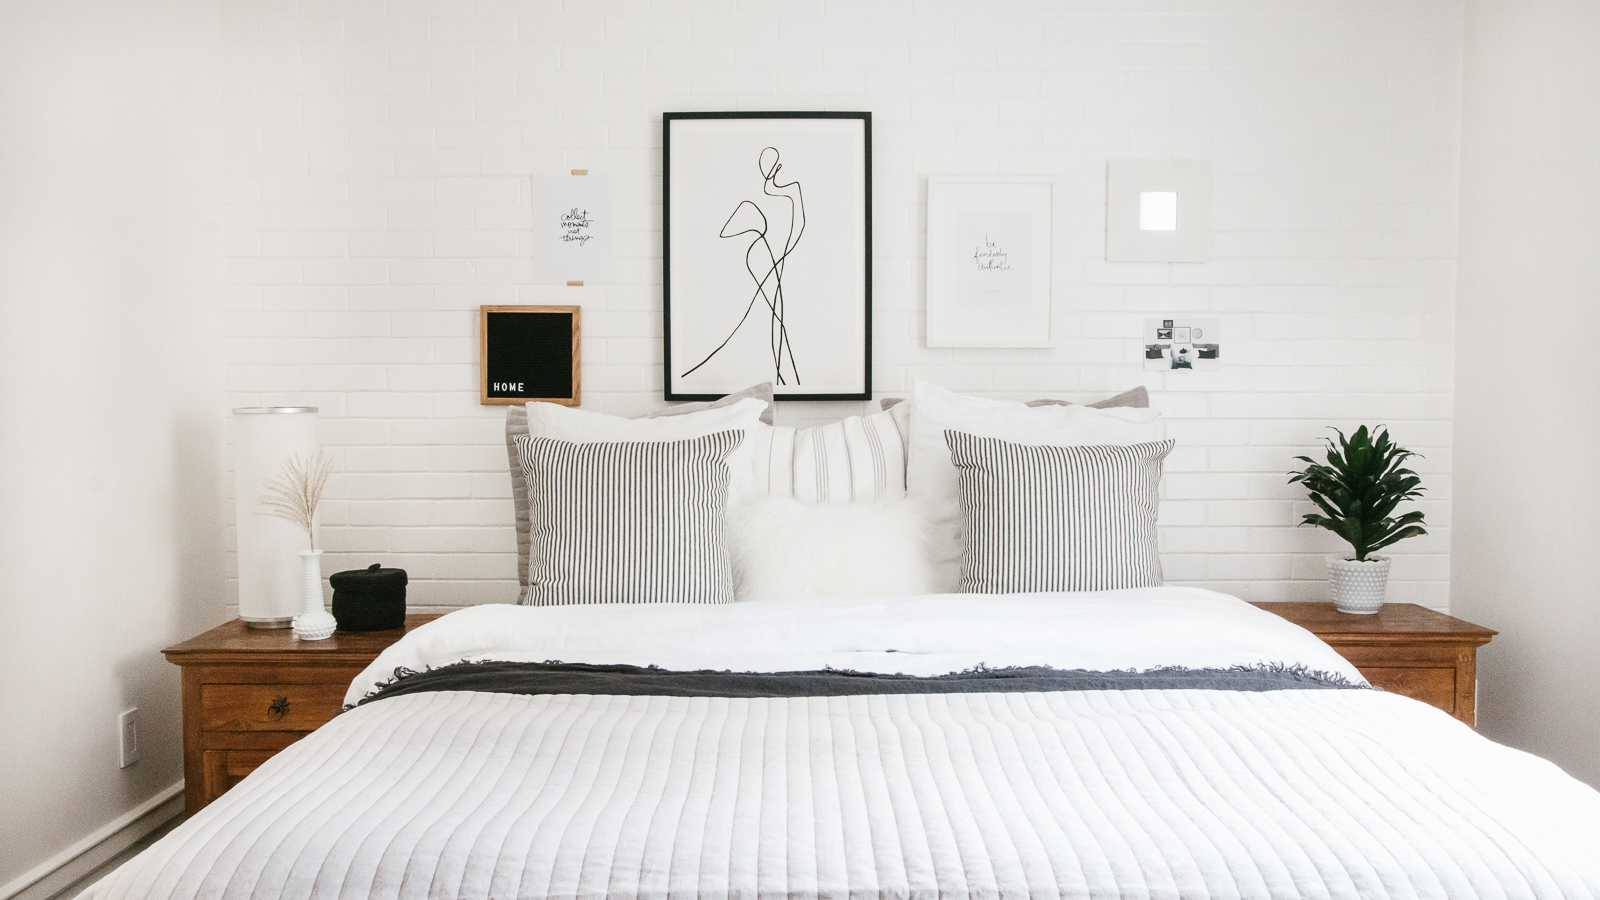 3 Bedroom Ideas that will effortlessly elevate your space | www.lynneknowlton.com